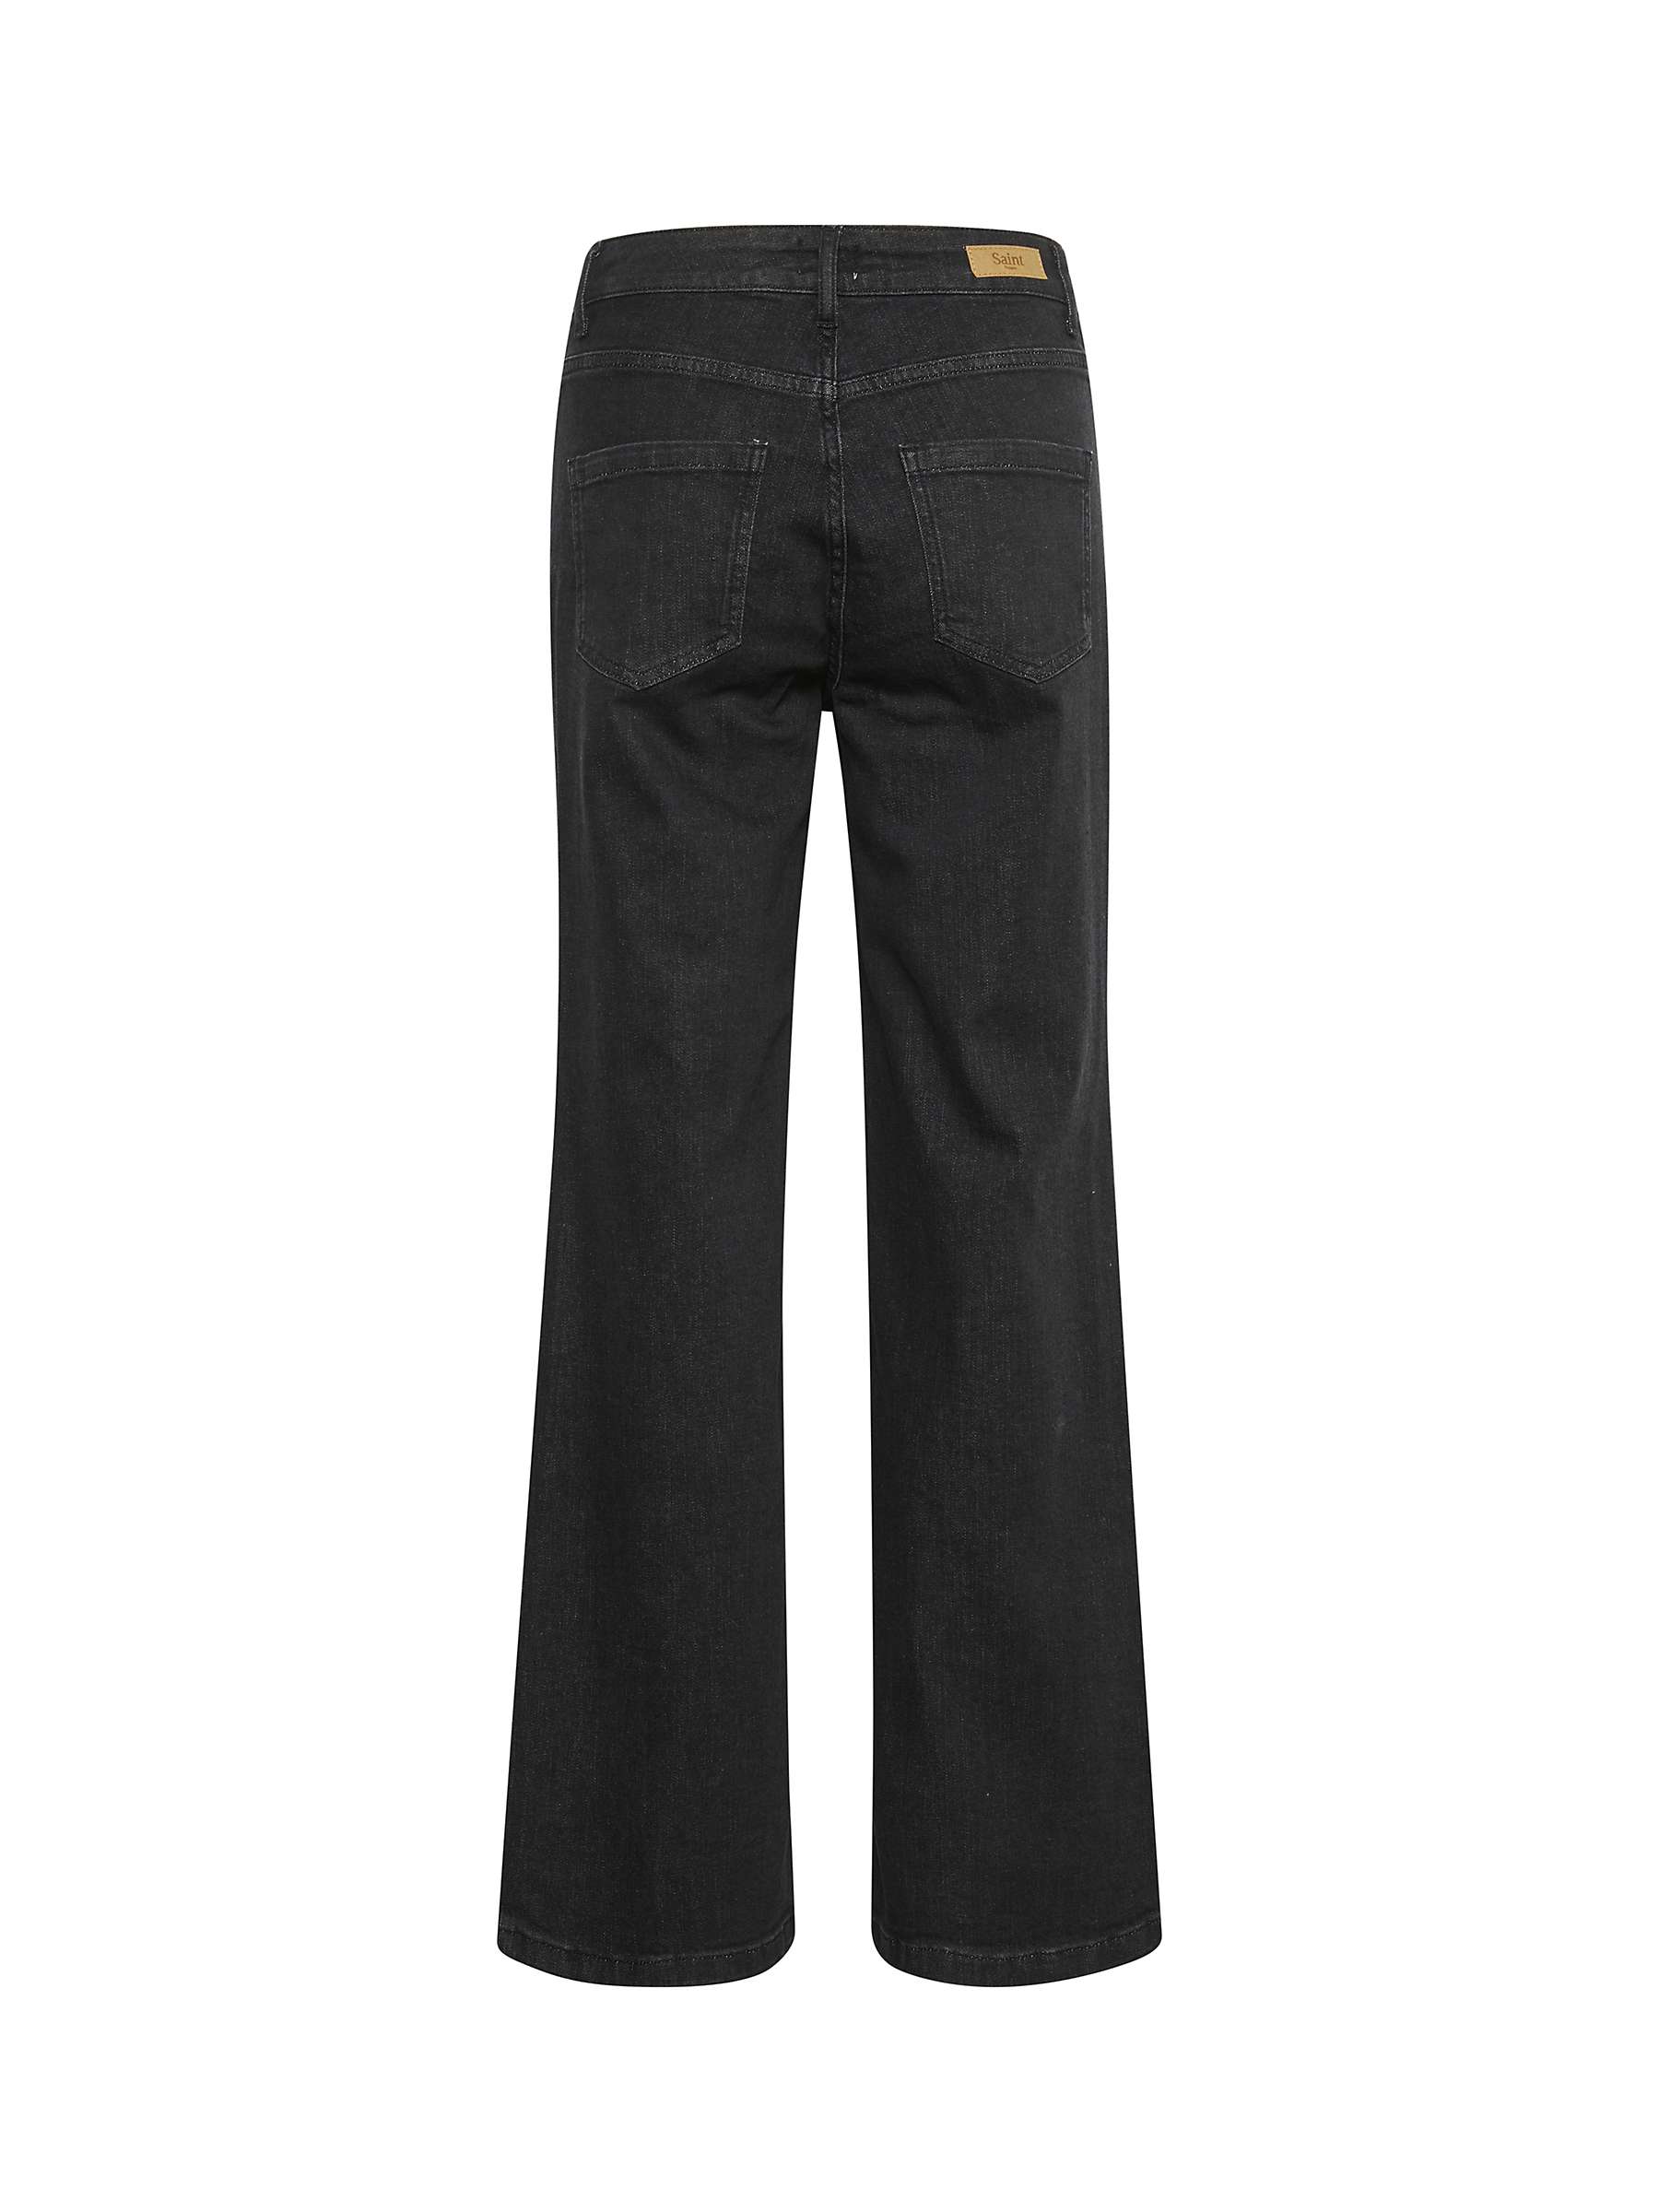 Buy Saint Tropez Holly Flared Regular Waist Jeans, Black Online at johnlewis.com